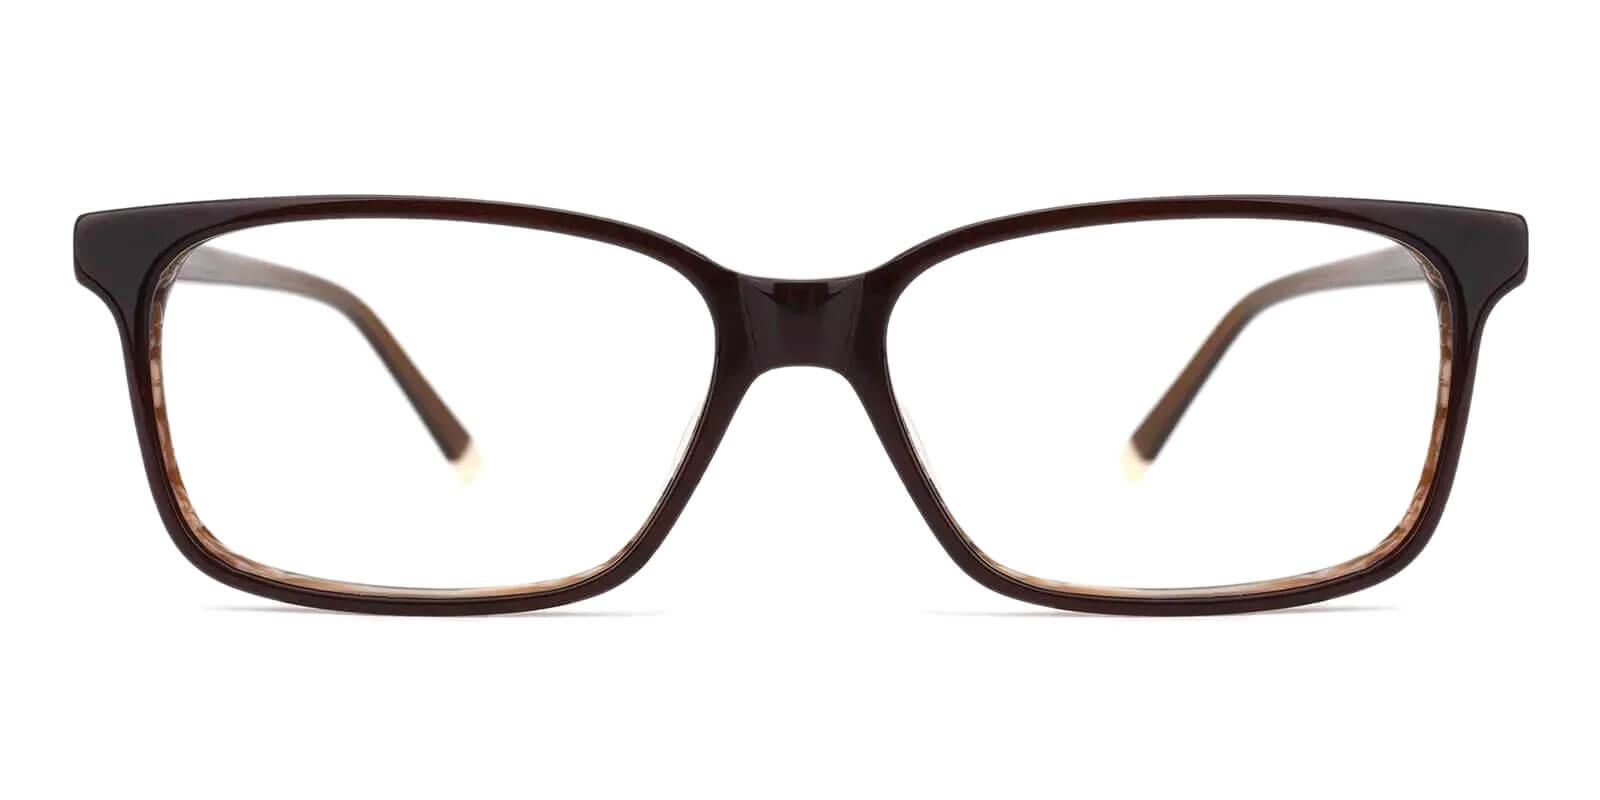 Lochloosa Striped Acetate Eyeglasses , SpringHinges , UniversalBridgeFit Frames from ABBE Glasses